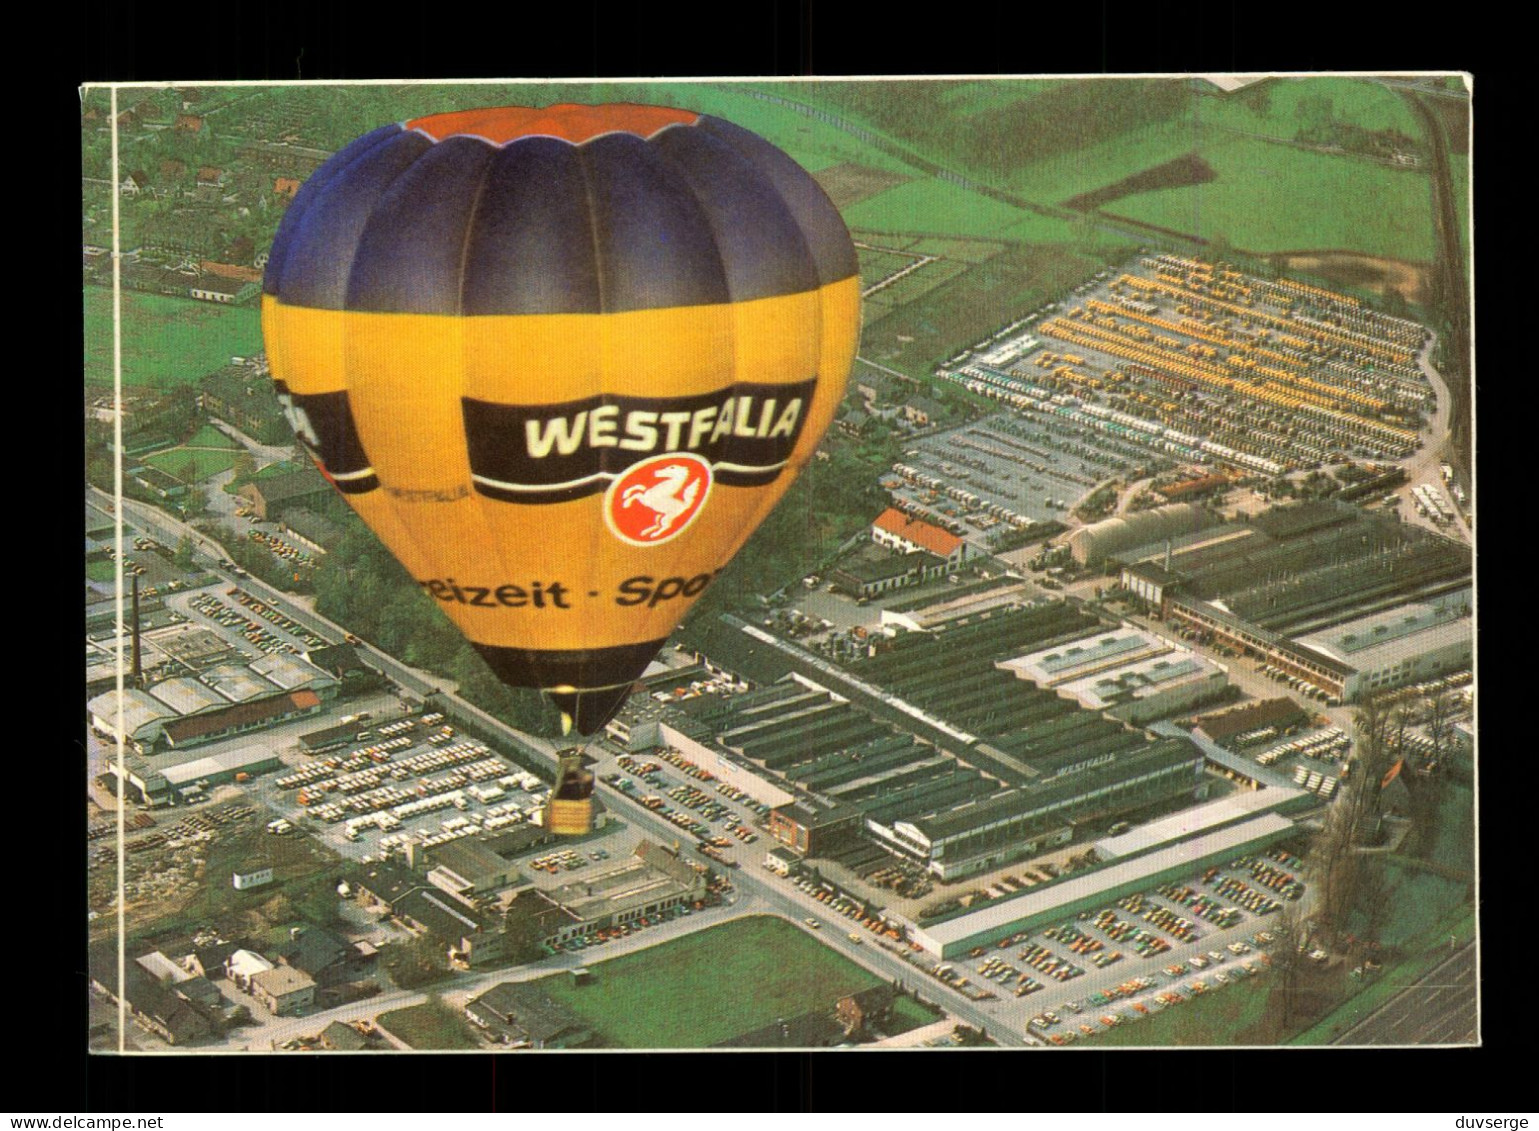 Heissluftballon " Westfalia " Montgolfiere Ballon Dirigeable - Balloons